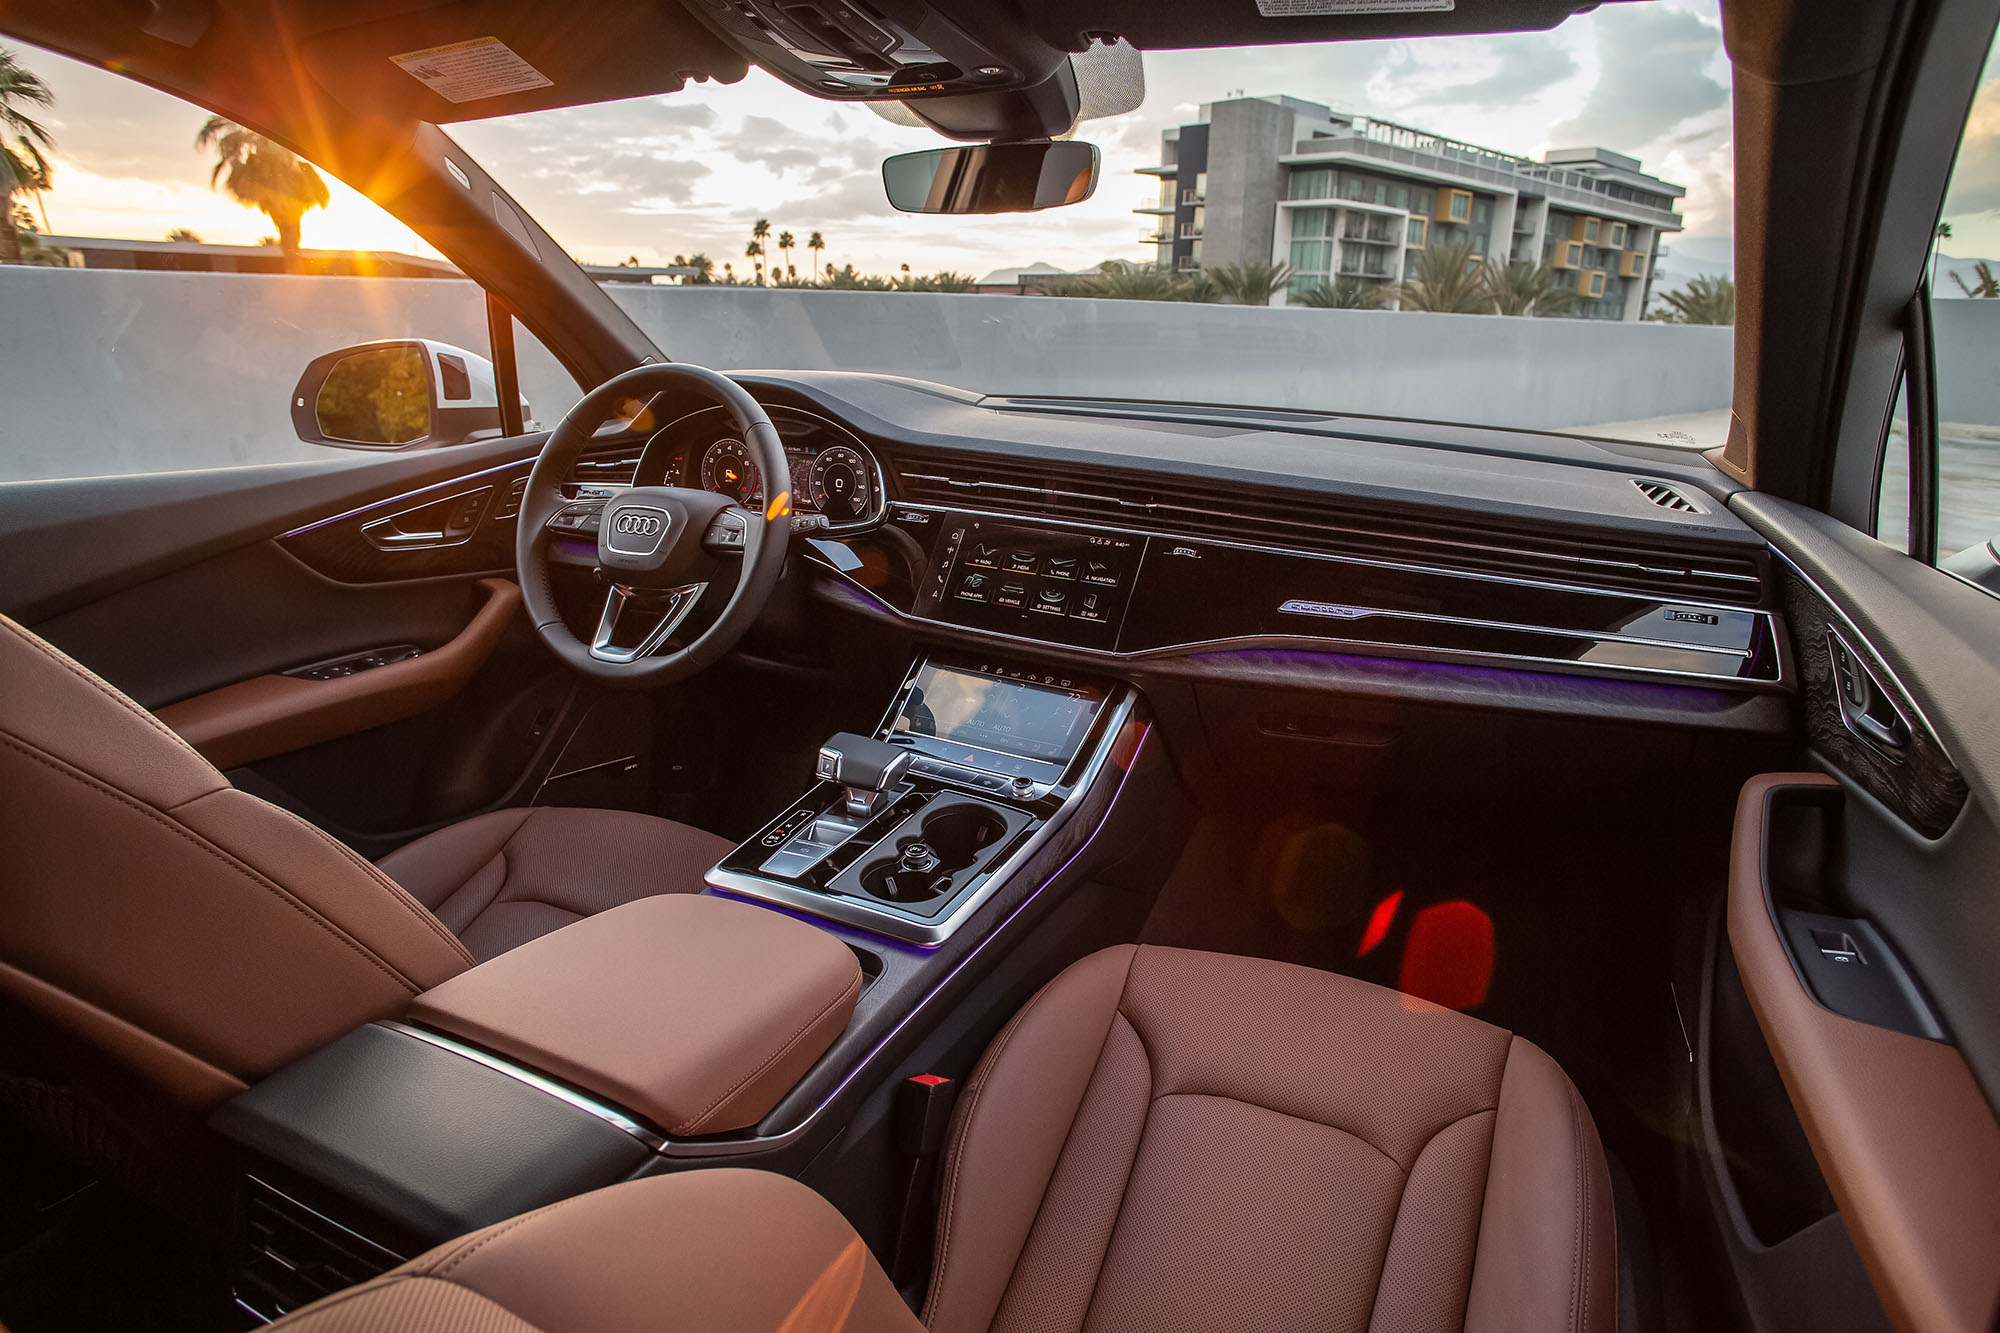 Audi Q7 interior, dashboard, and brown seats